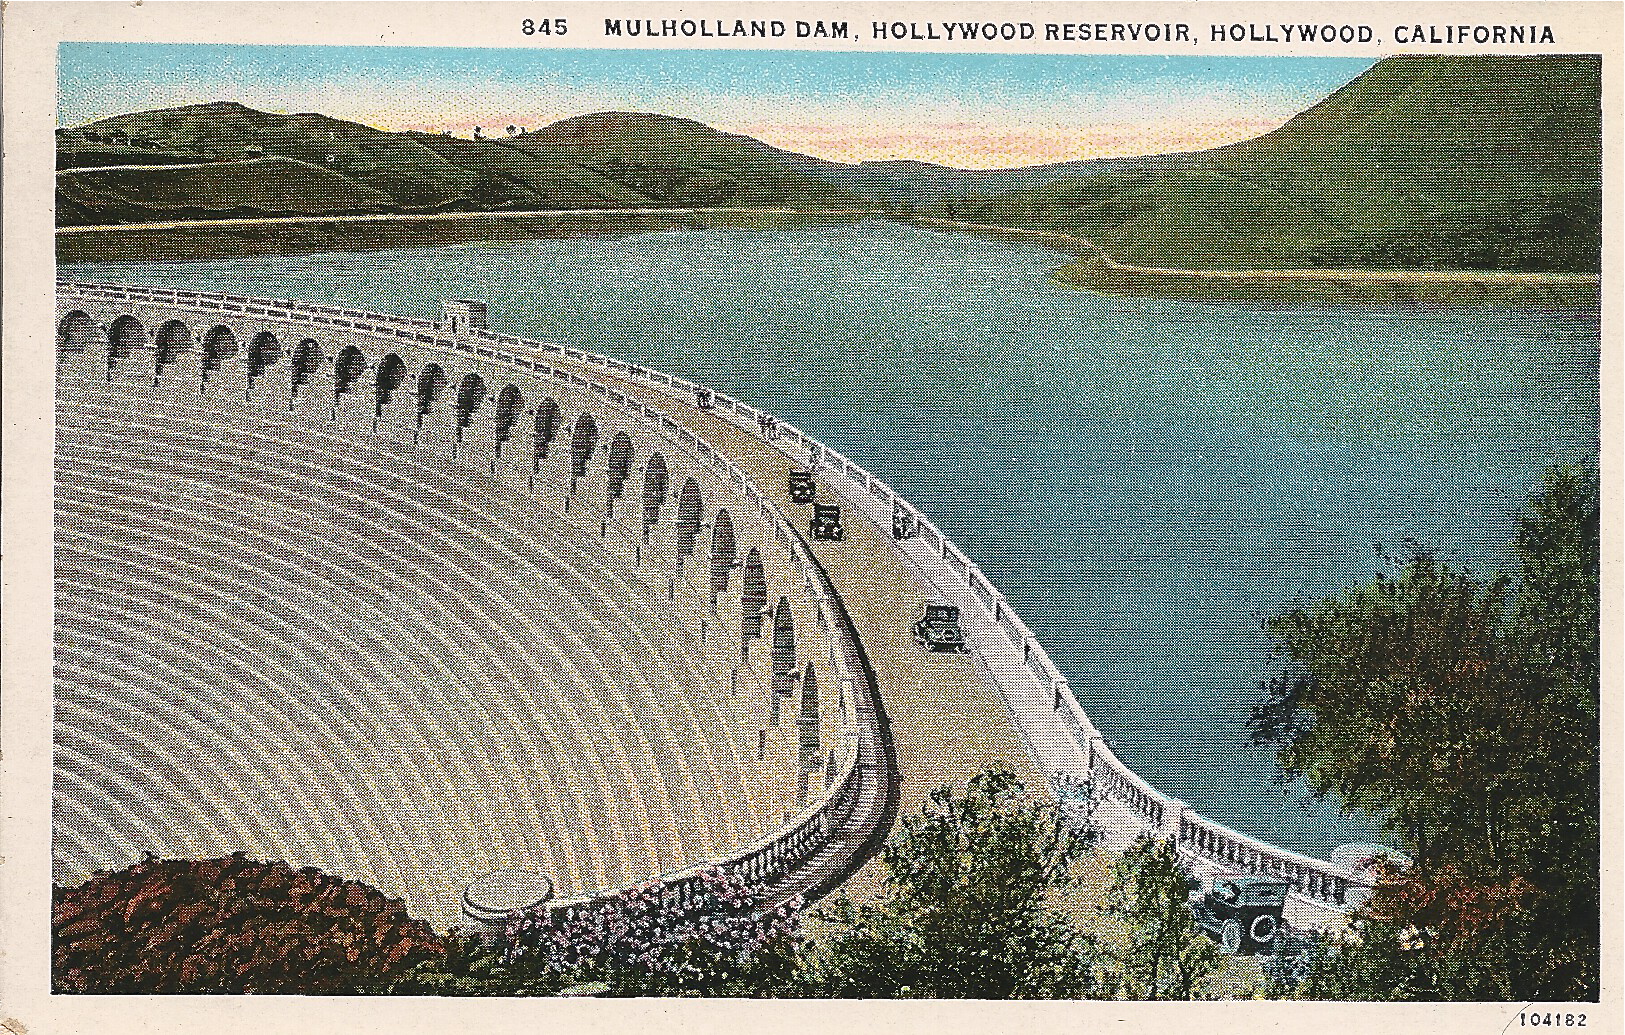 Mulholland Dam/Hollywood Reservoir